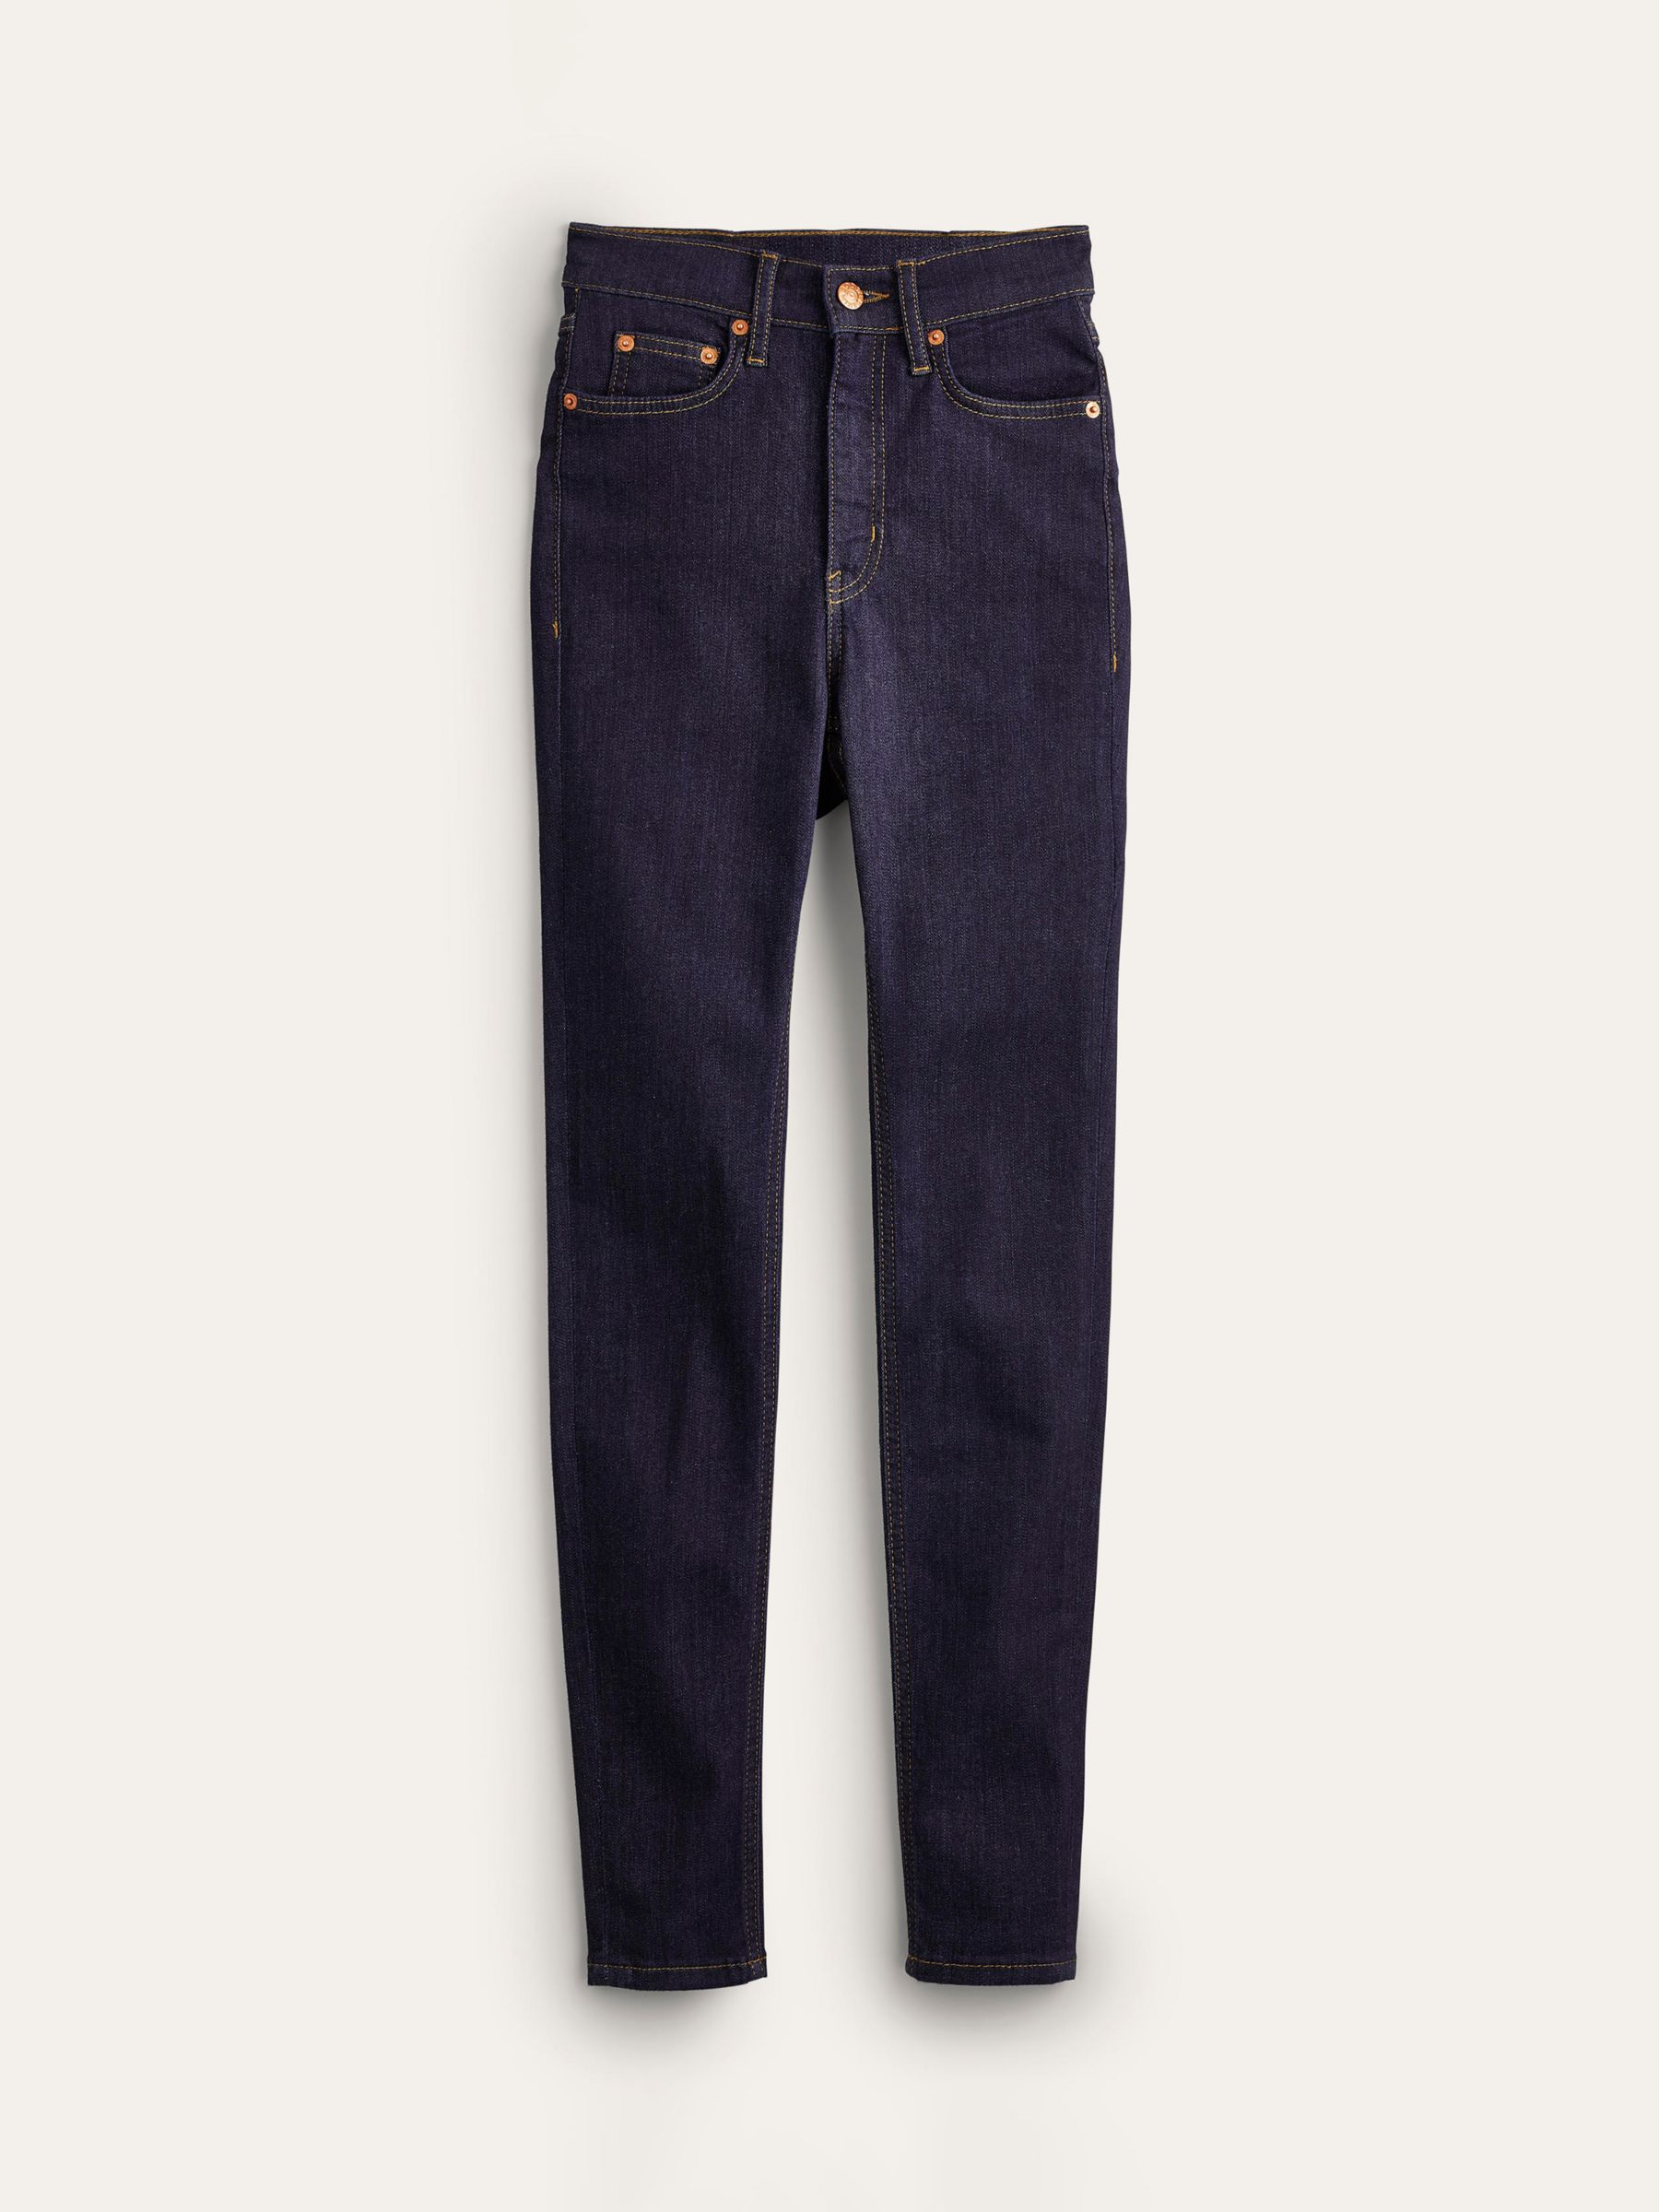 Boden Stretch Skinny Jeans, Indigo at John Lewis & Partners